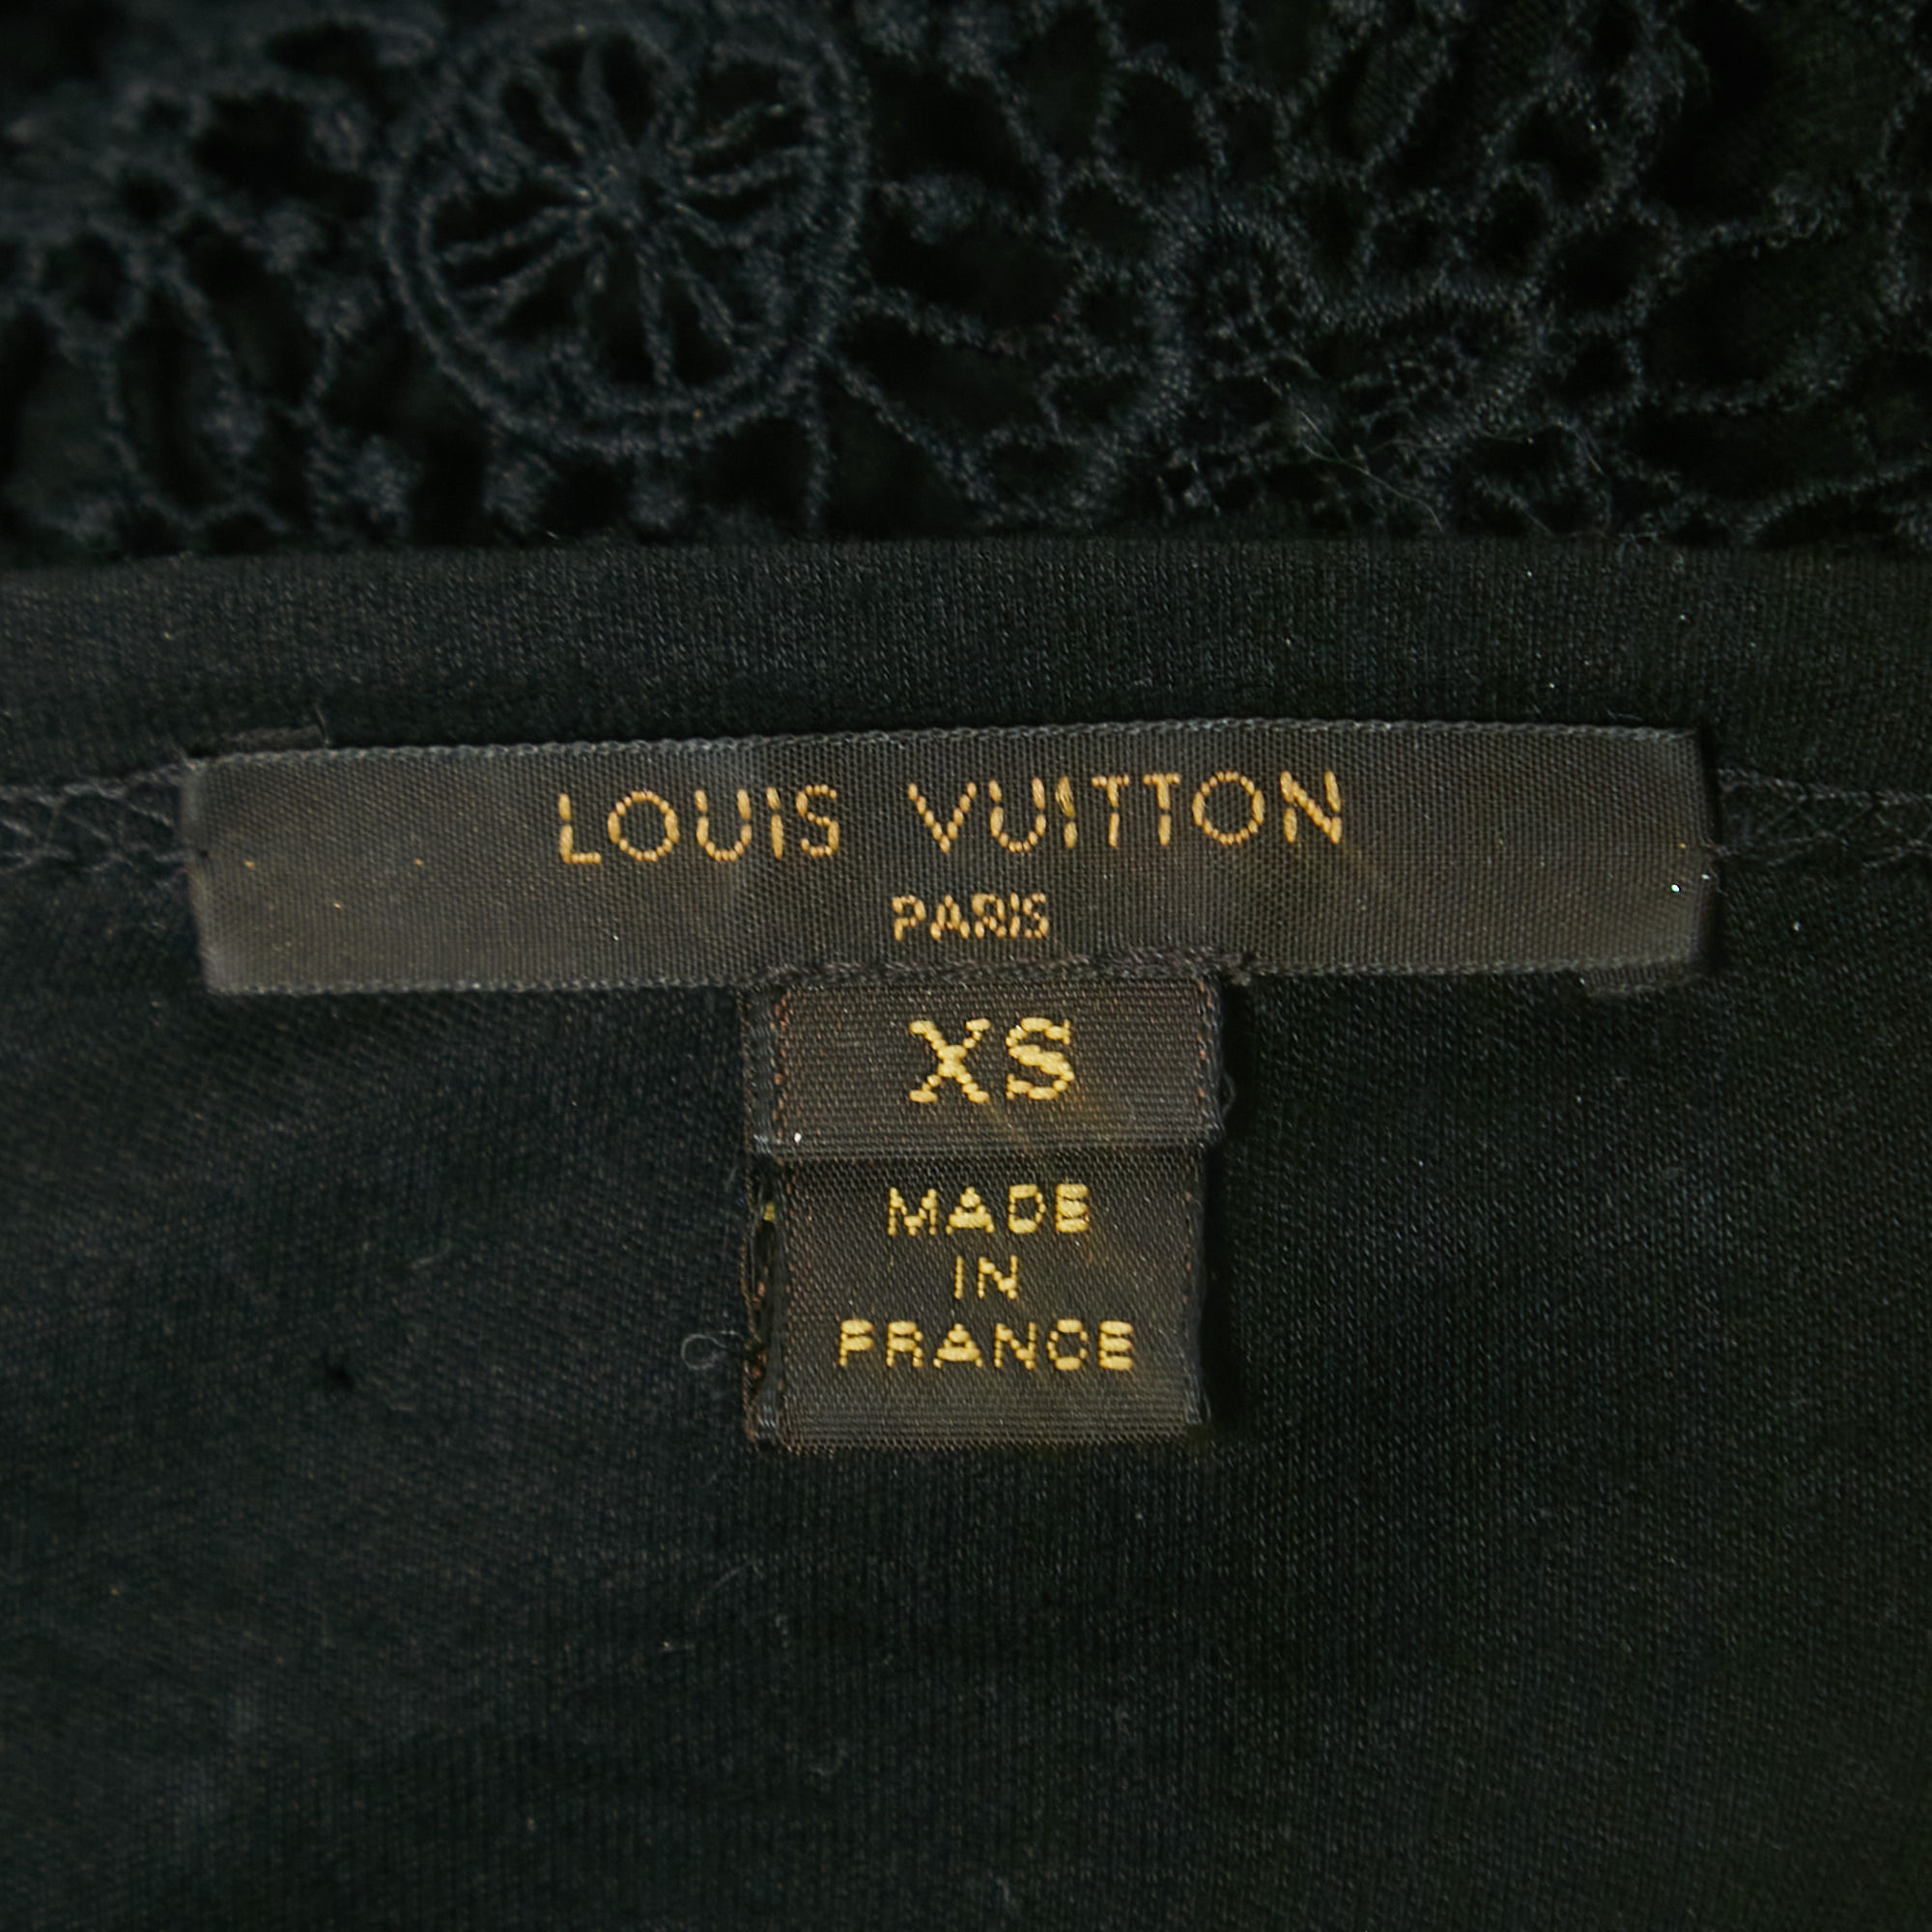 Louis Vuitton Black Lace Knit Long Sleeve Top XS